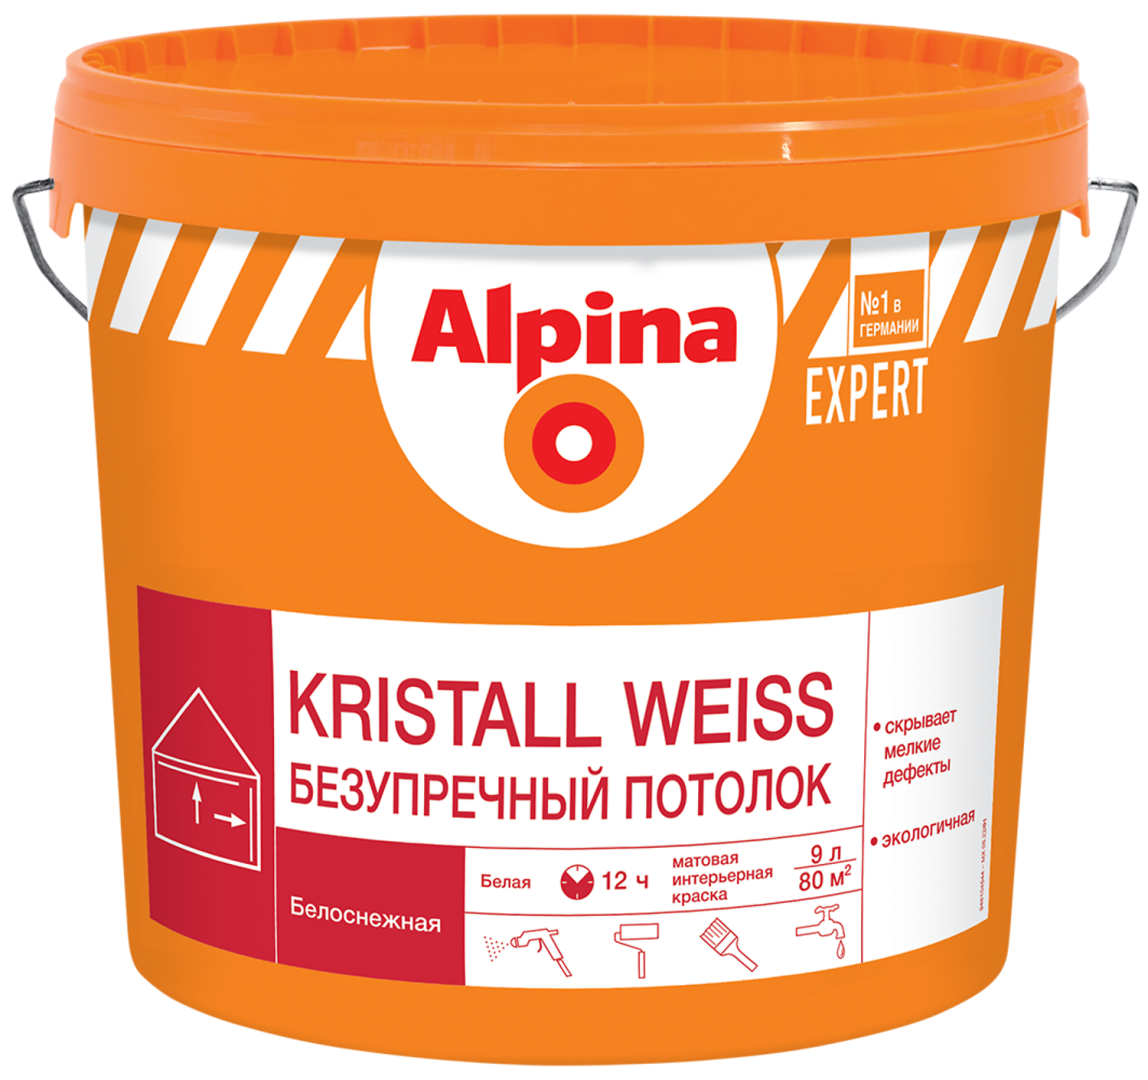 ALPINA EXPERT KRISTALL WEISS краска для внутренних работ белая, БЕЗУПРЕЧНЫЙ ПОТОЛОК (2,5л)